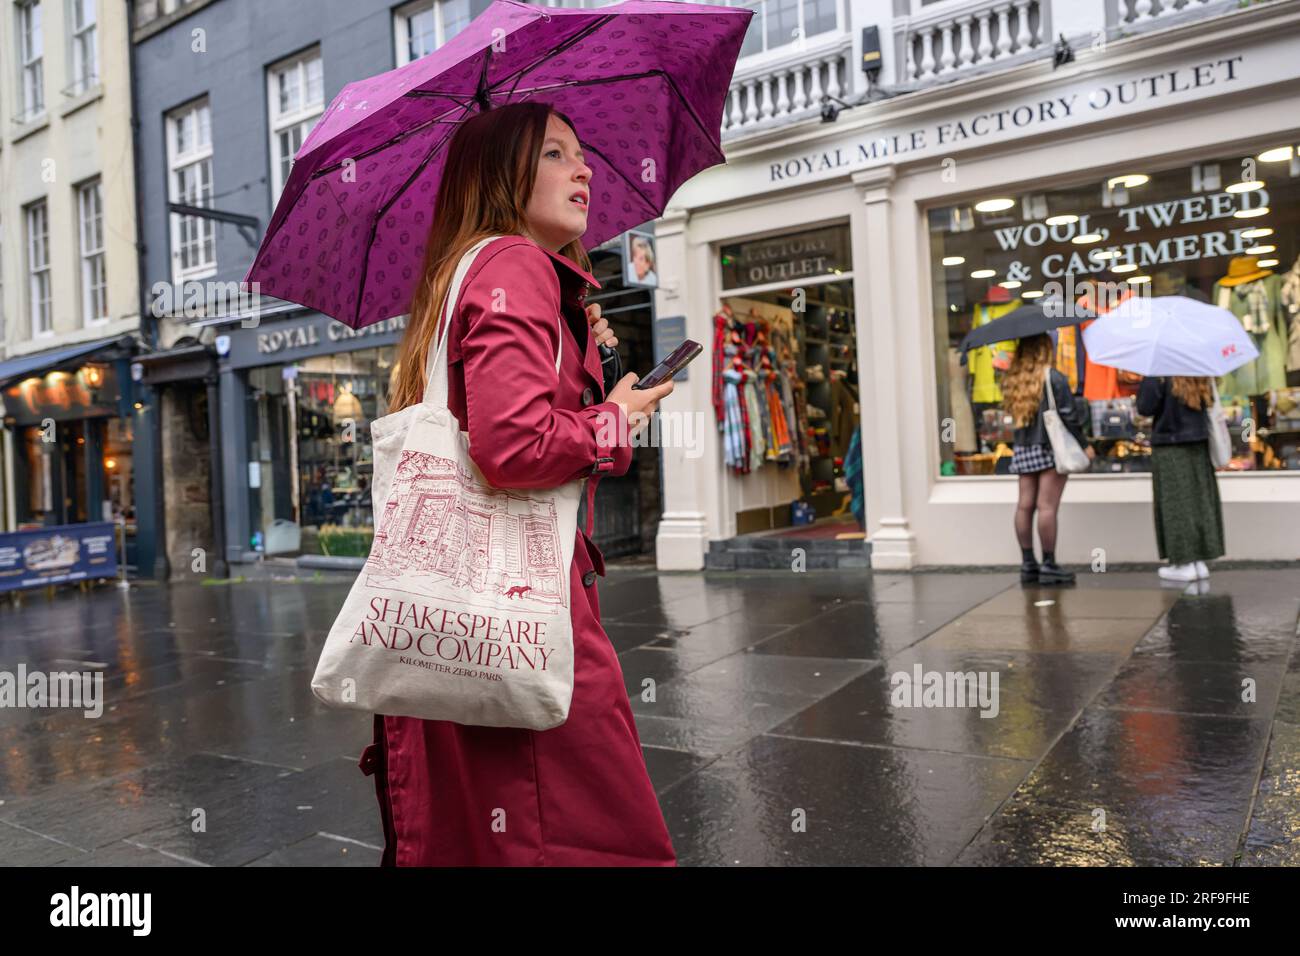 Shopper With Broken Umbrella & Mobile Phone On A Rainy Day On High Street, The Royal Mile, Edinburgh, Scotland, United Kingdom, UK Stock Photo